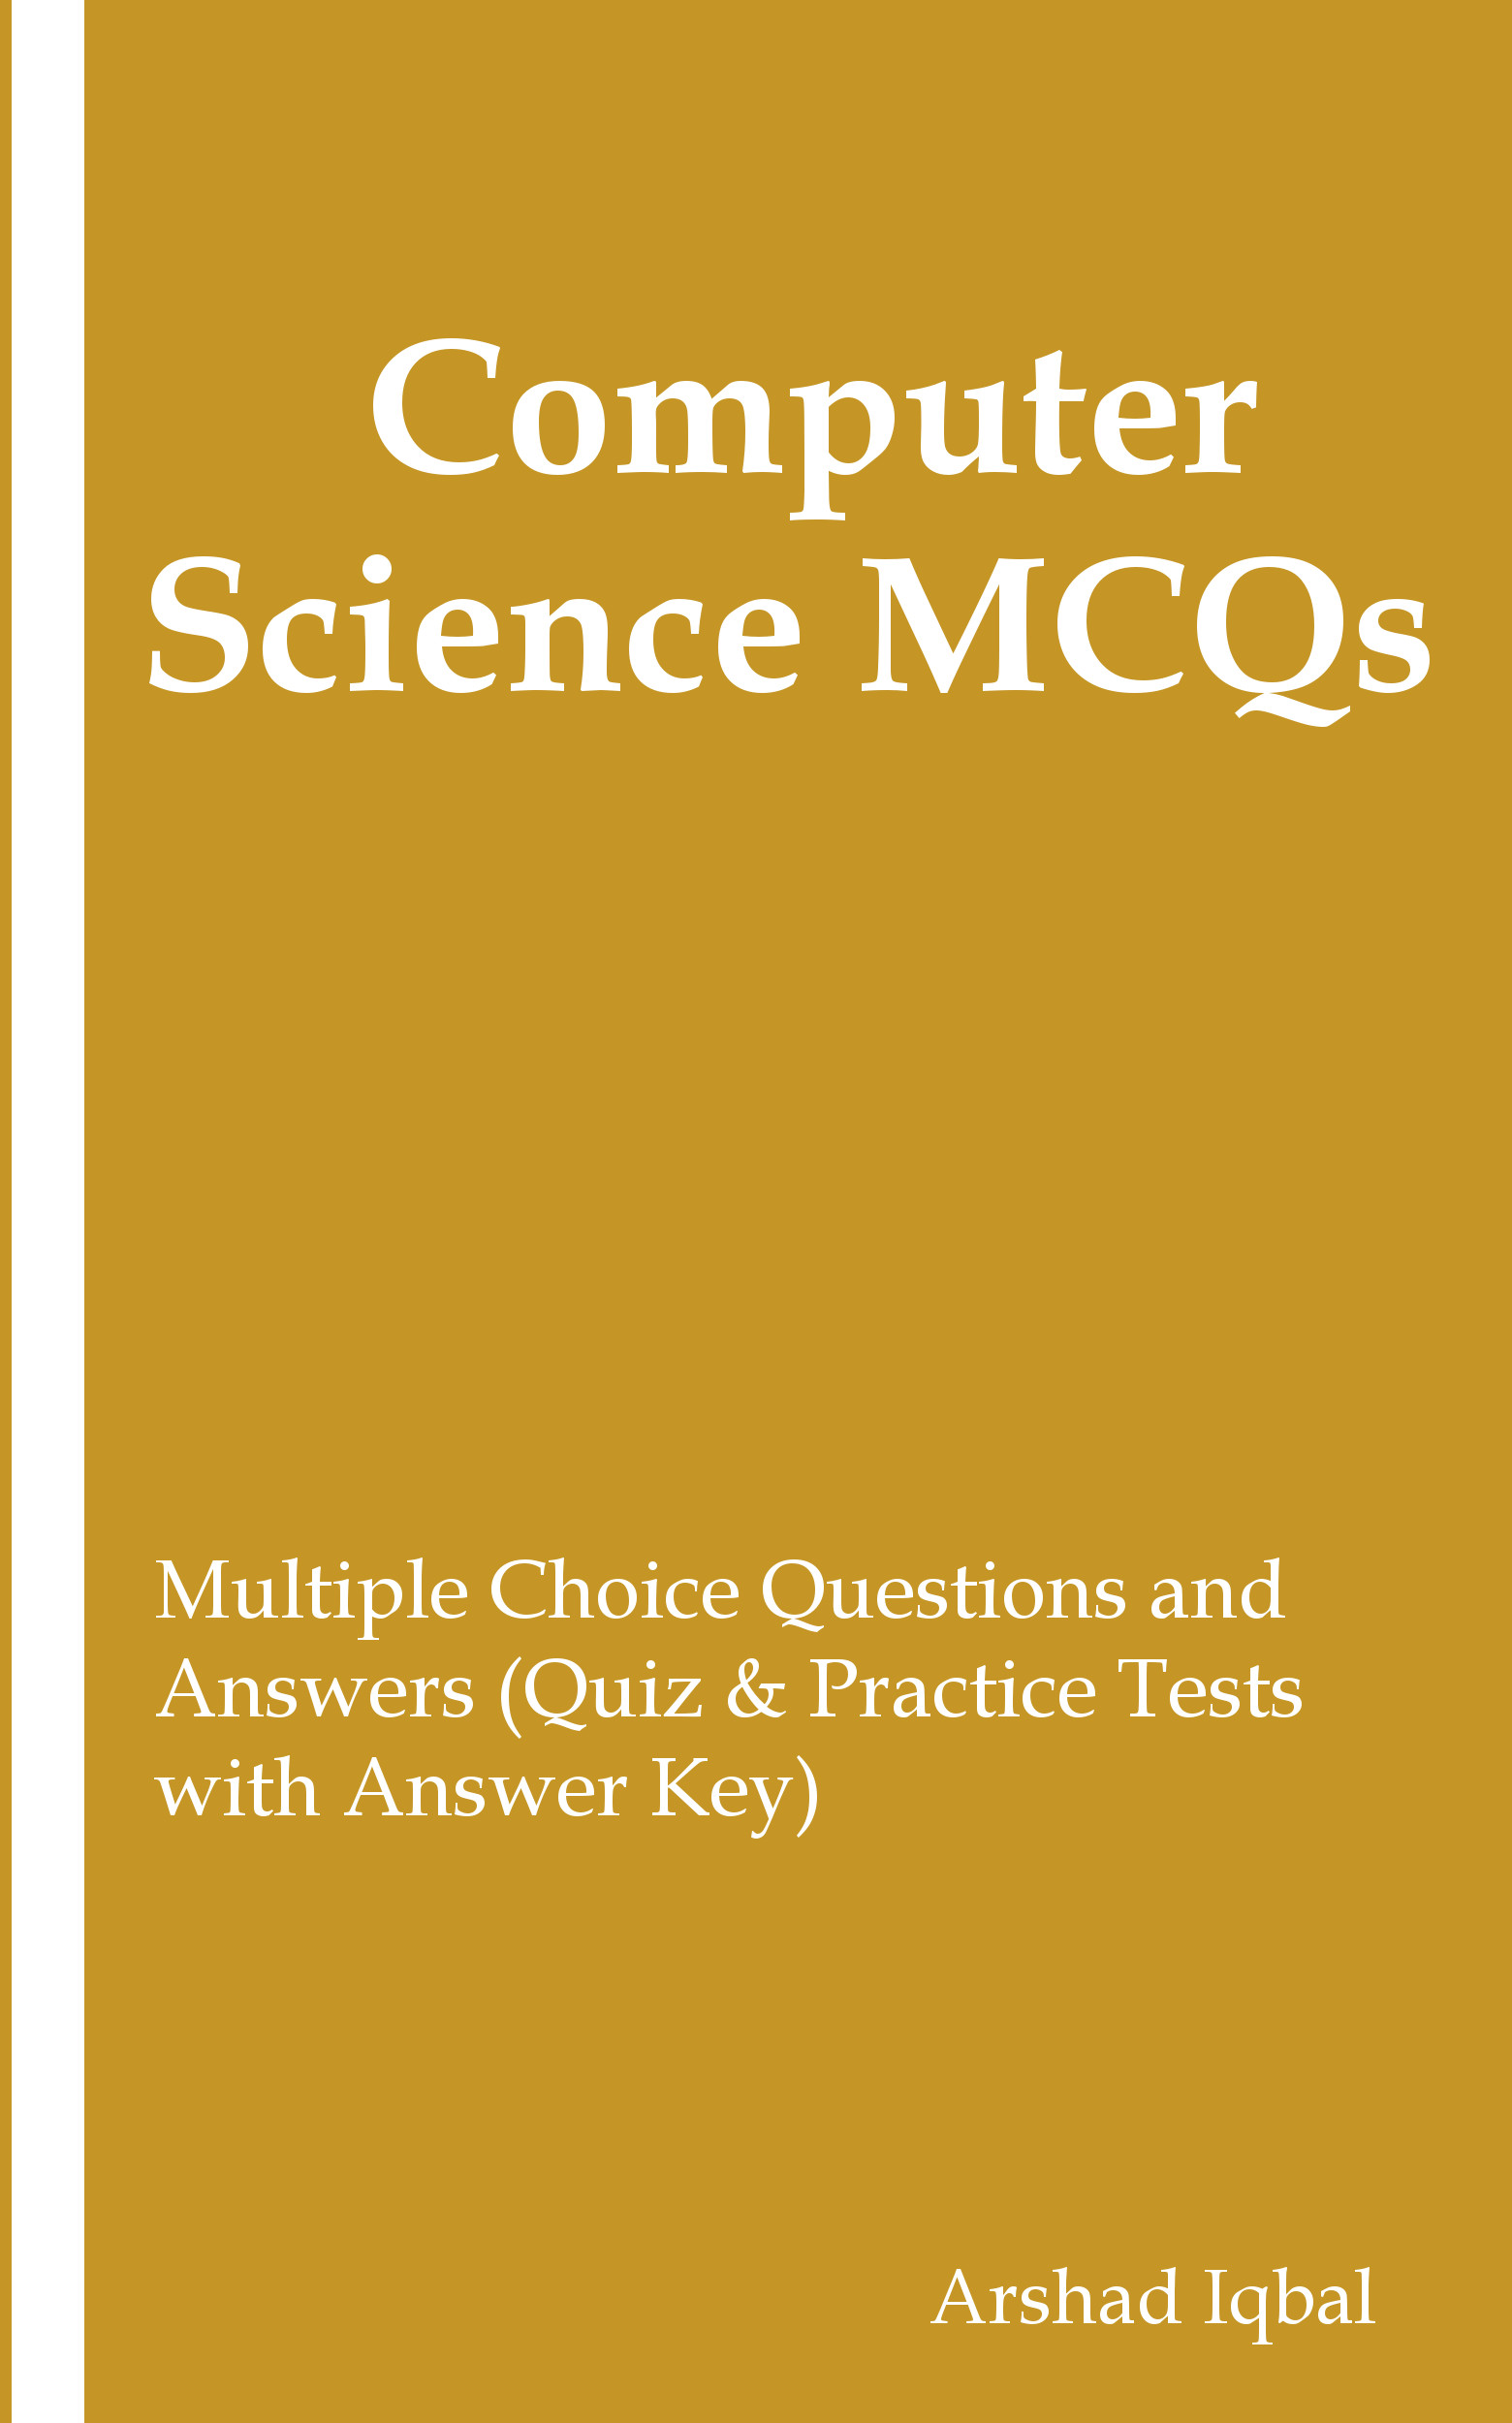 Computer Basics MCQ Book PDF